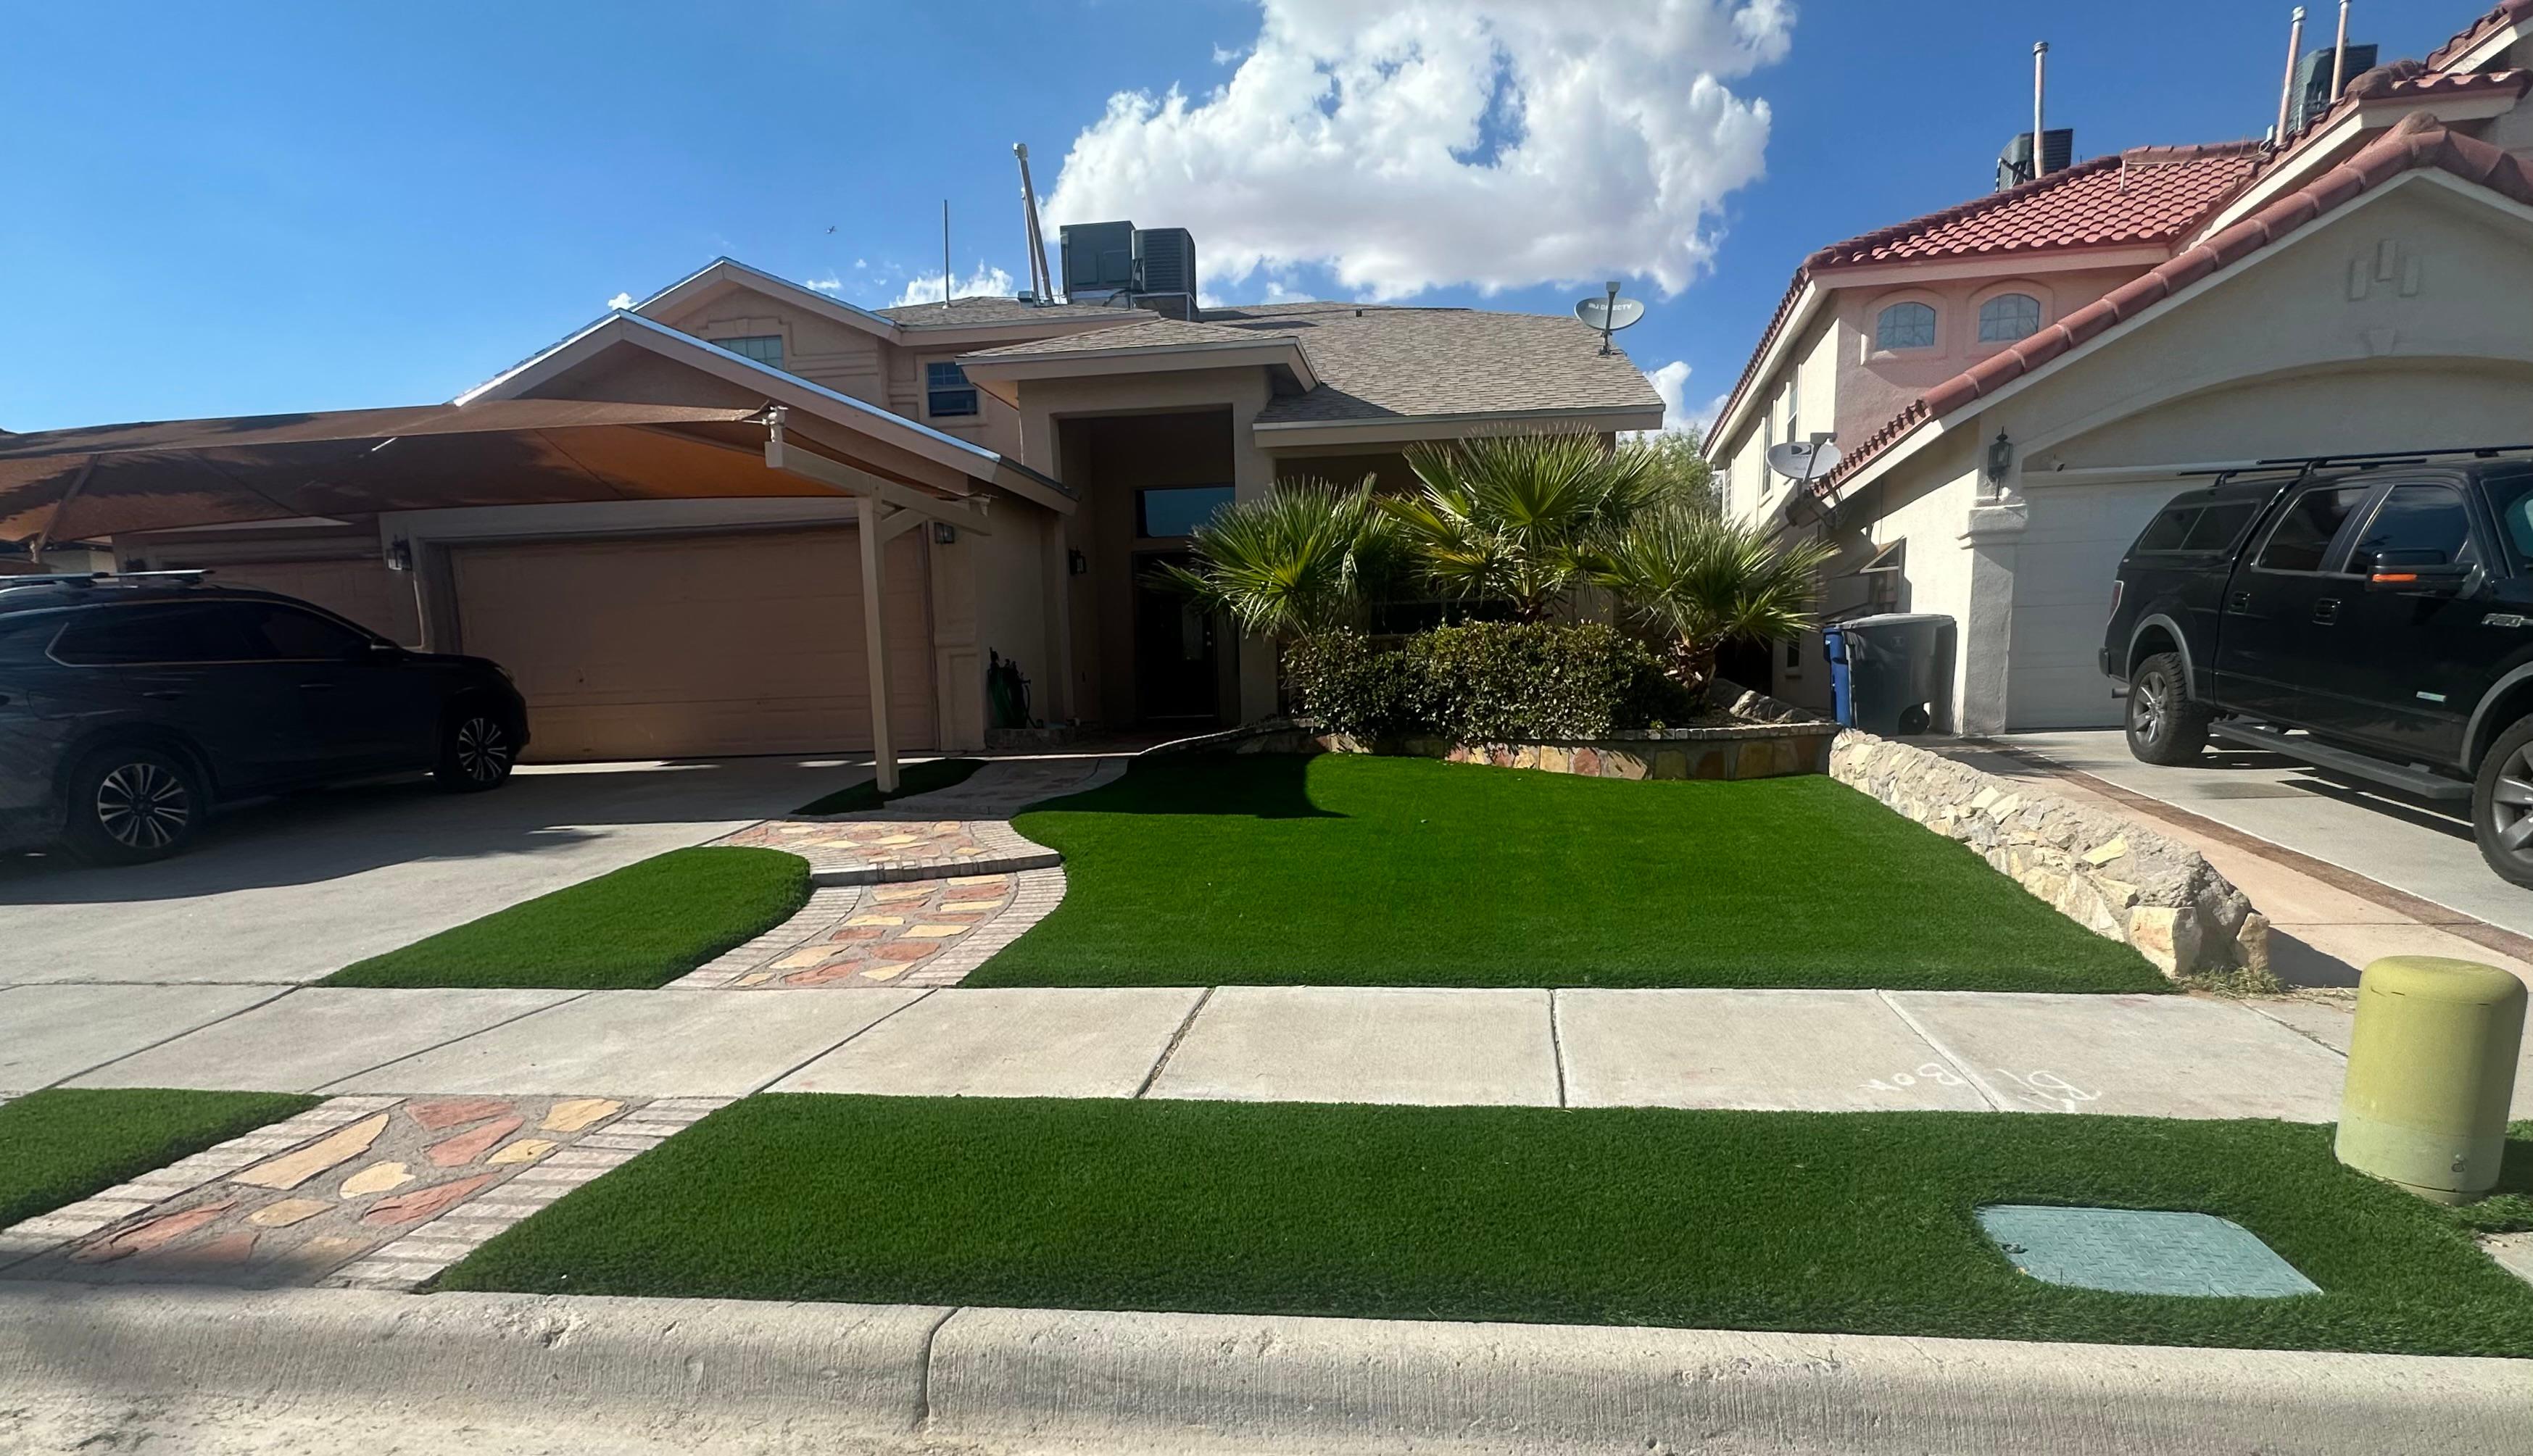 Purchase Green Artificial Grass El Paso (915)308-0897